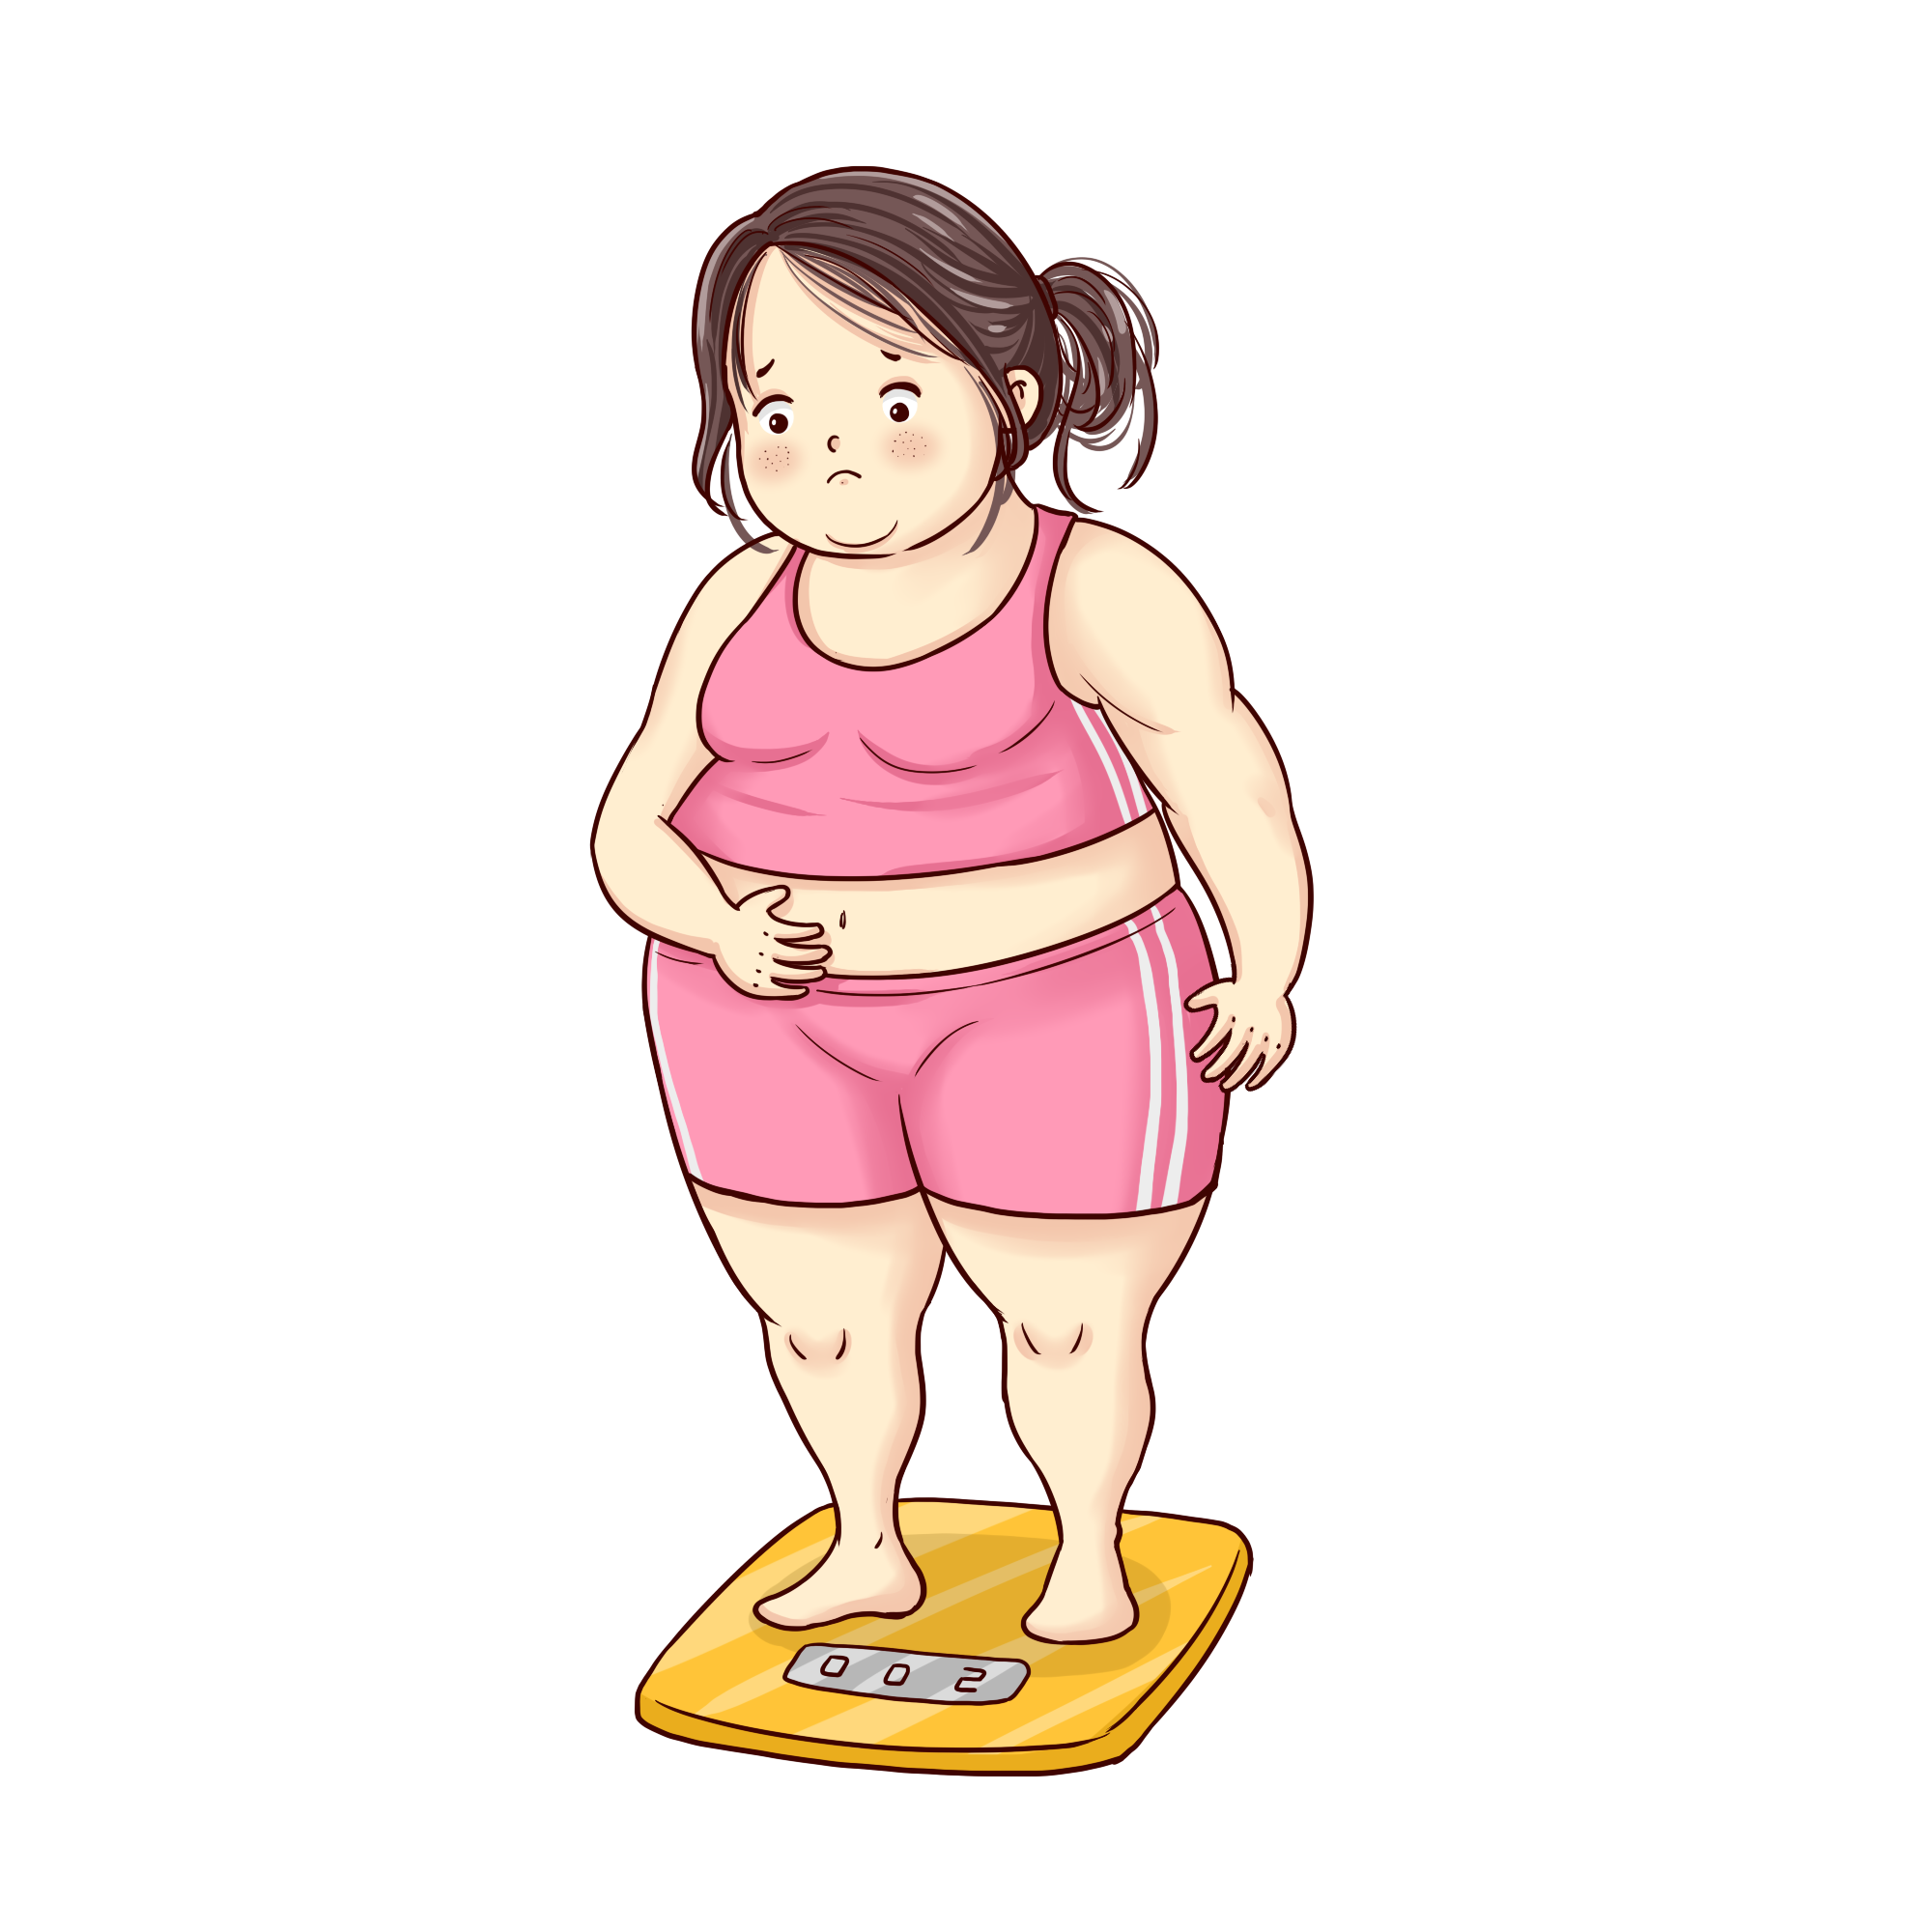 Lovepik_com-401247822-fat-girl-losing-weight